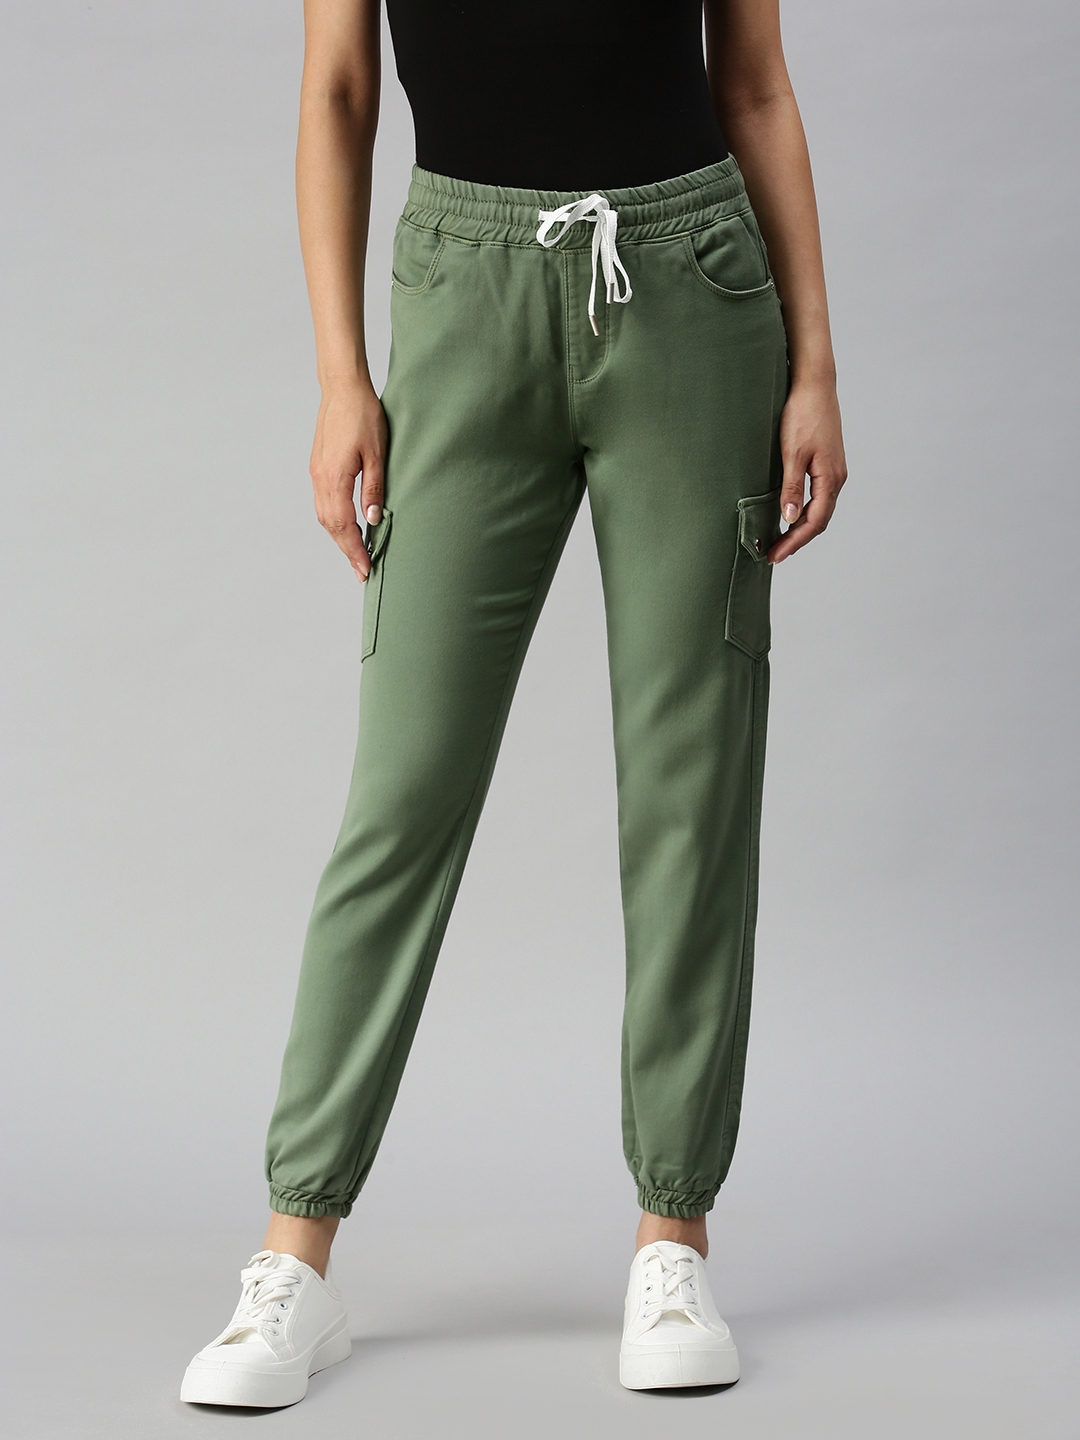 SHOWOFF Women's Clean Look Green Jogger Denim Jeans